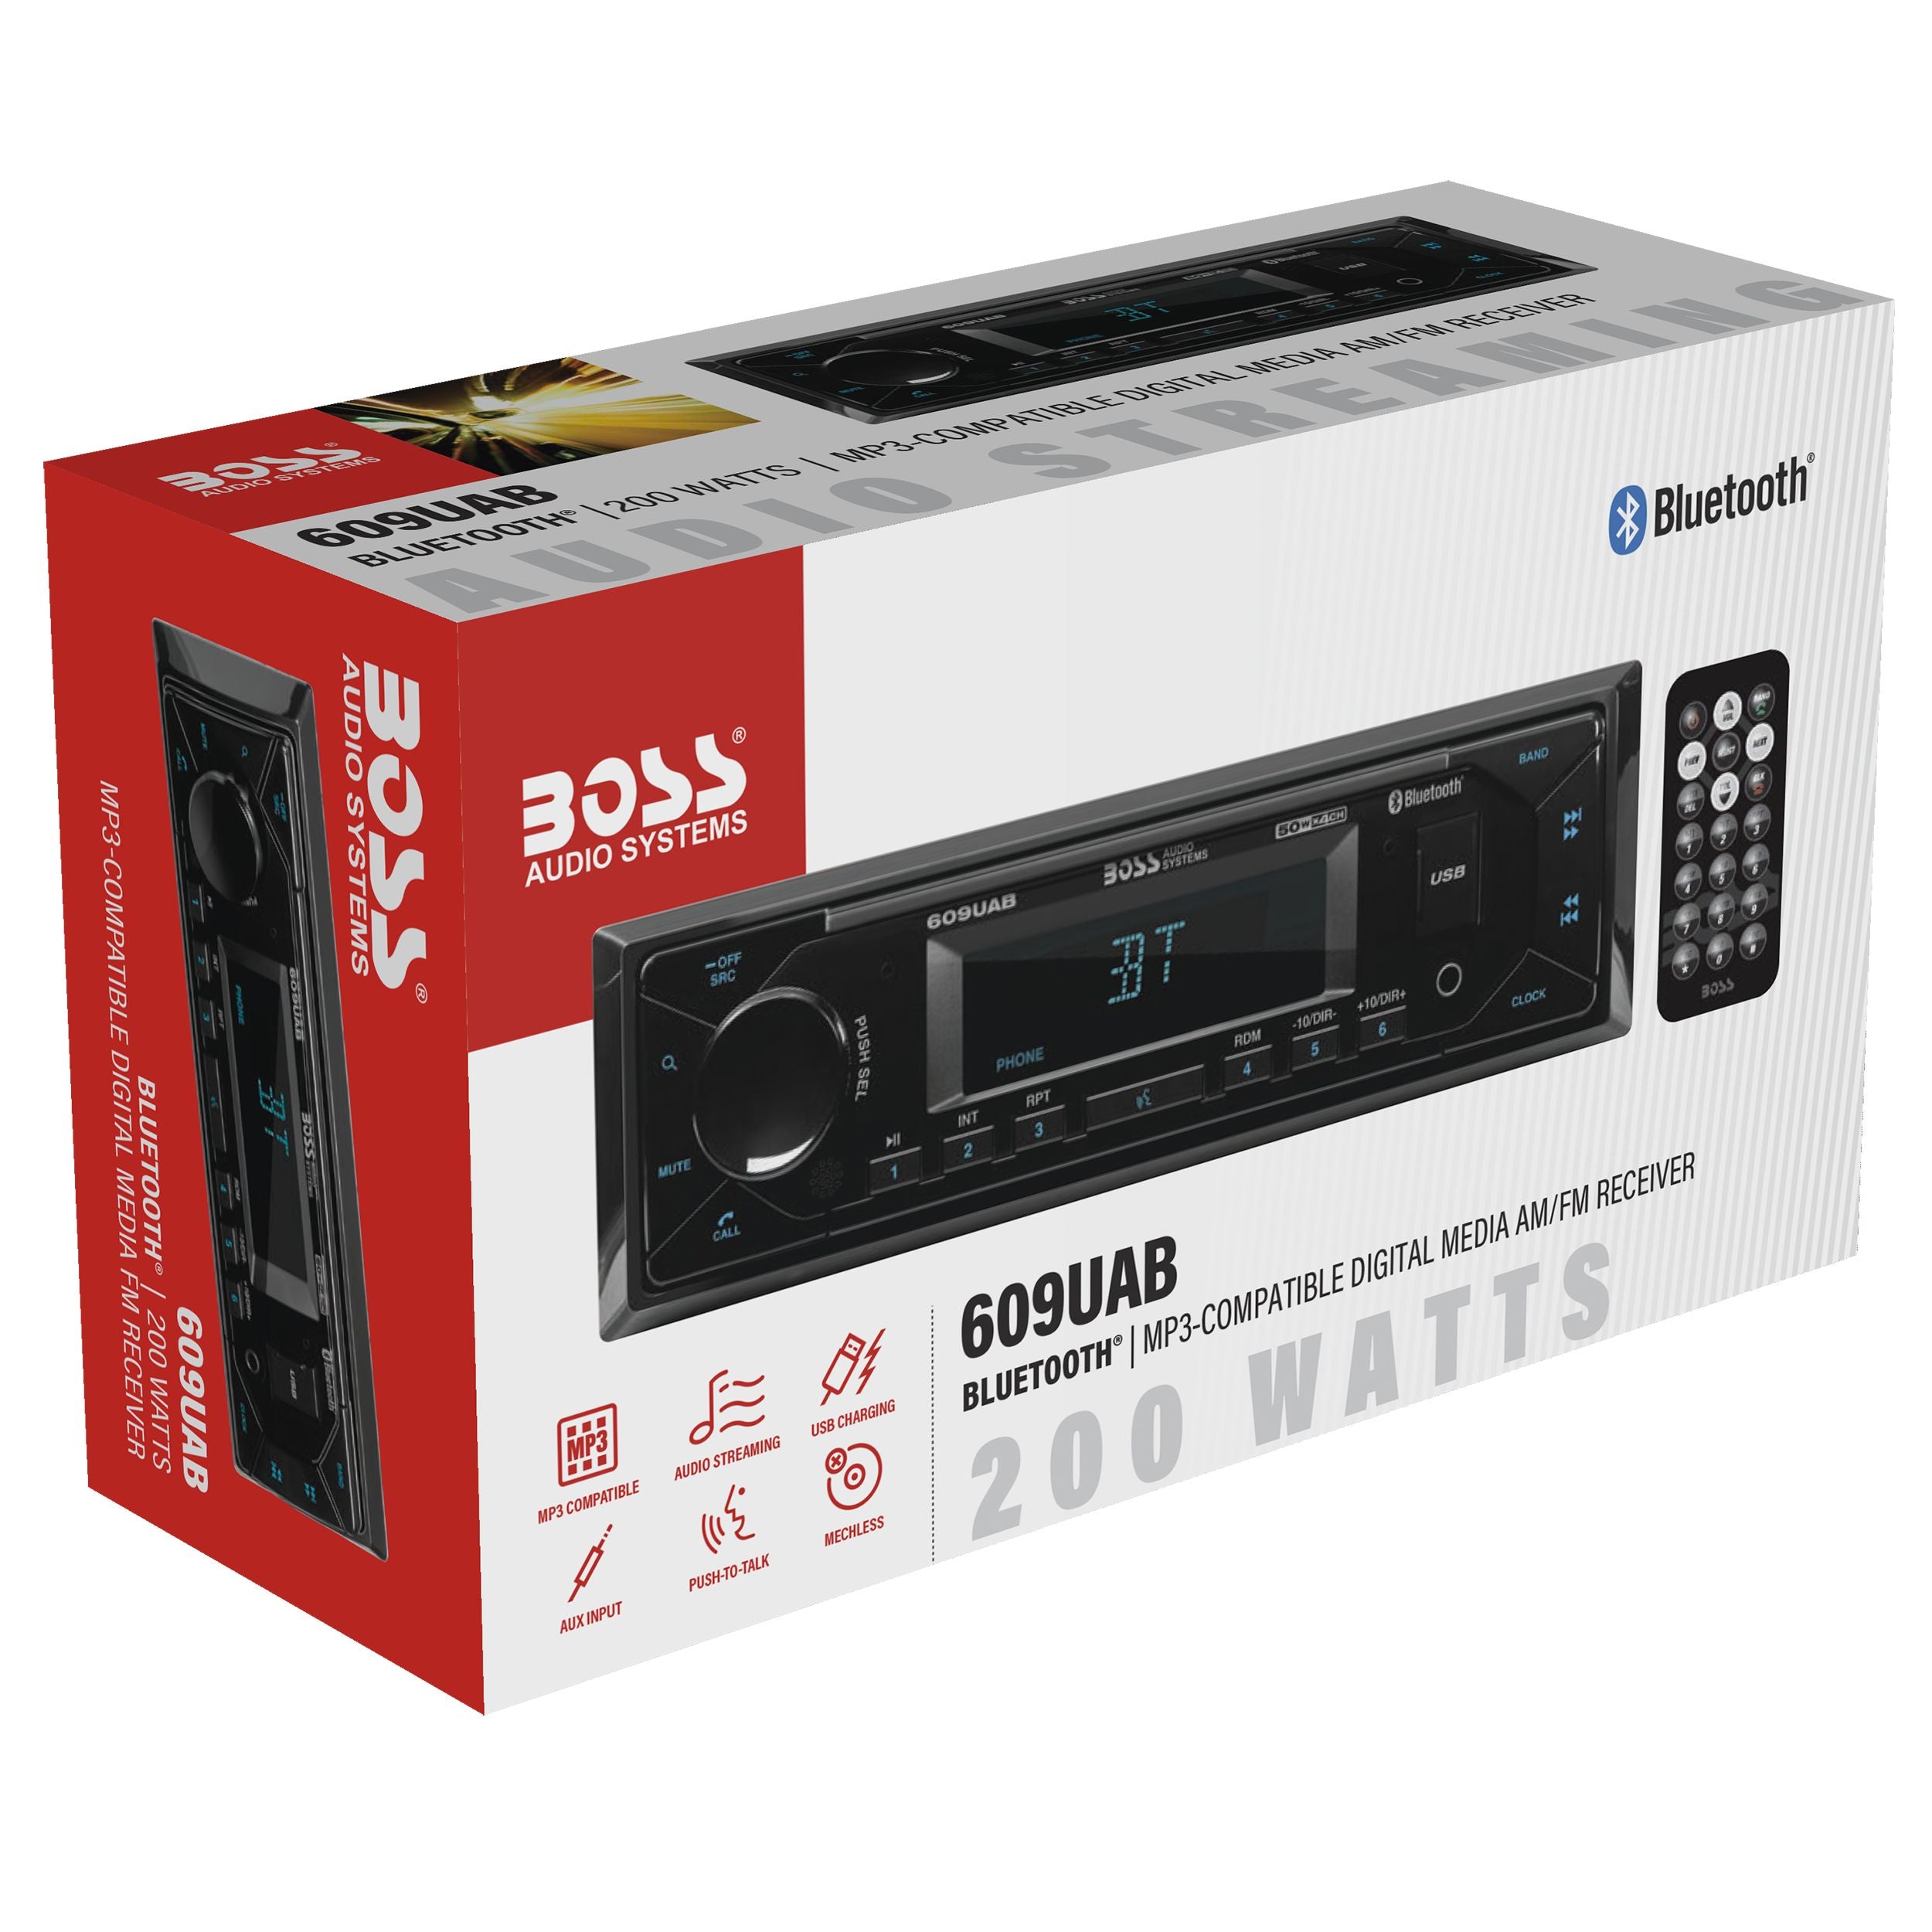 Boss 609UAB - Single-DIN, MECH-LESS Multimedia Player (no CD/DVD) Bluetooth